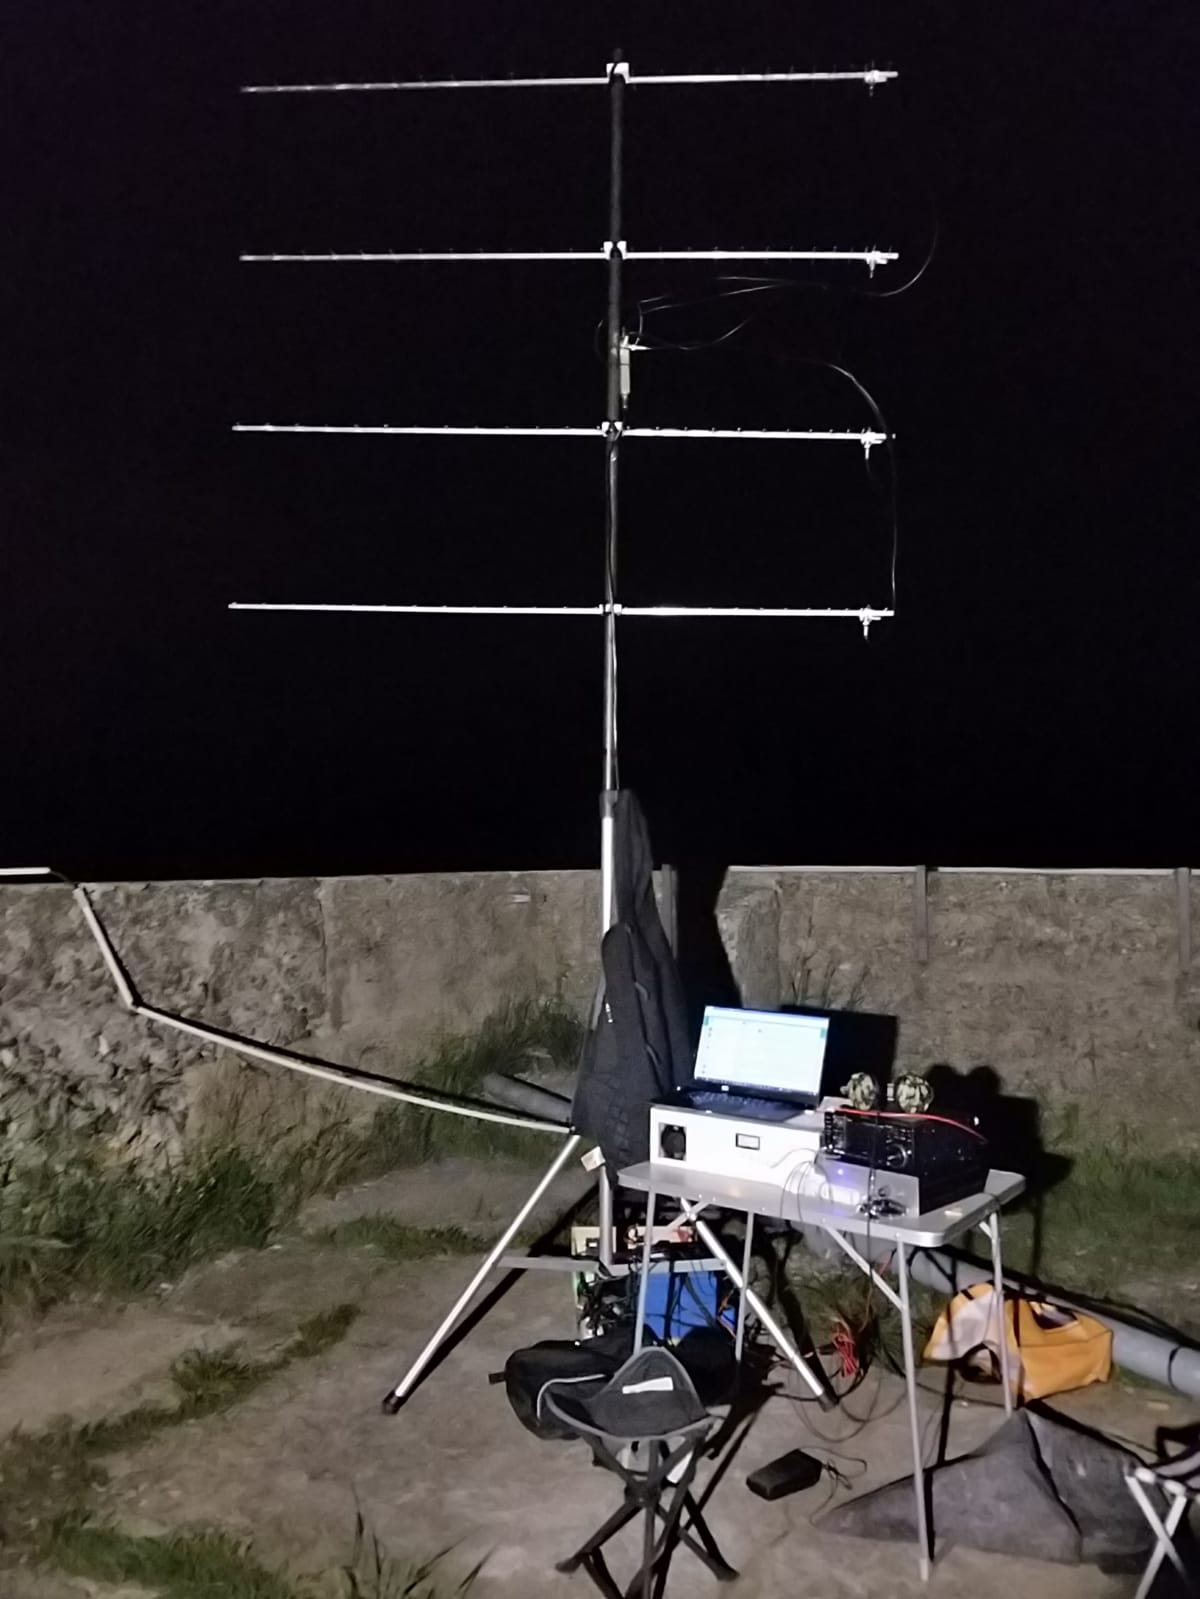 IZ1KGA Italian Activity Contest 1296 MHz by night